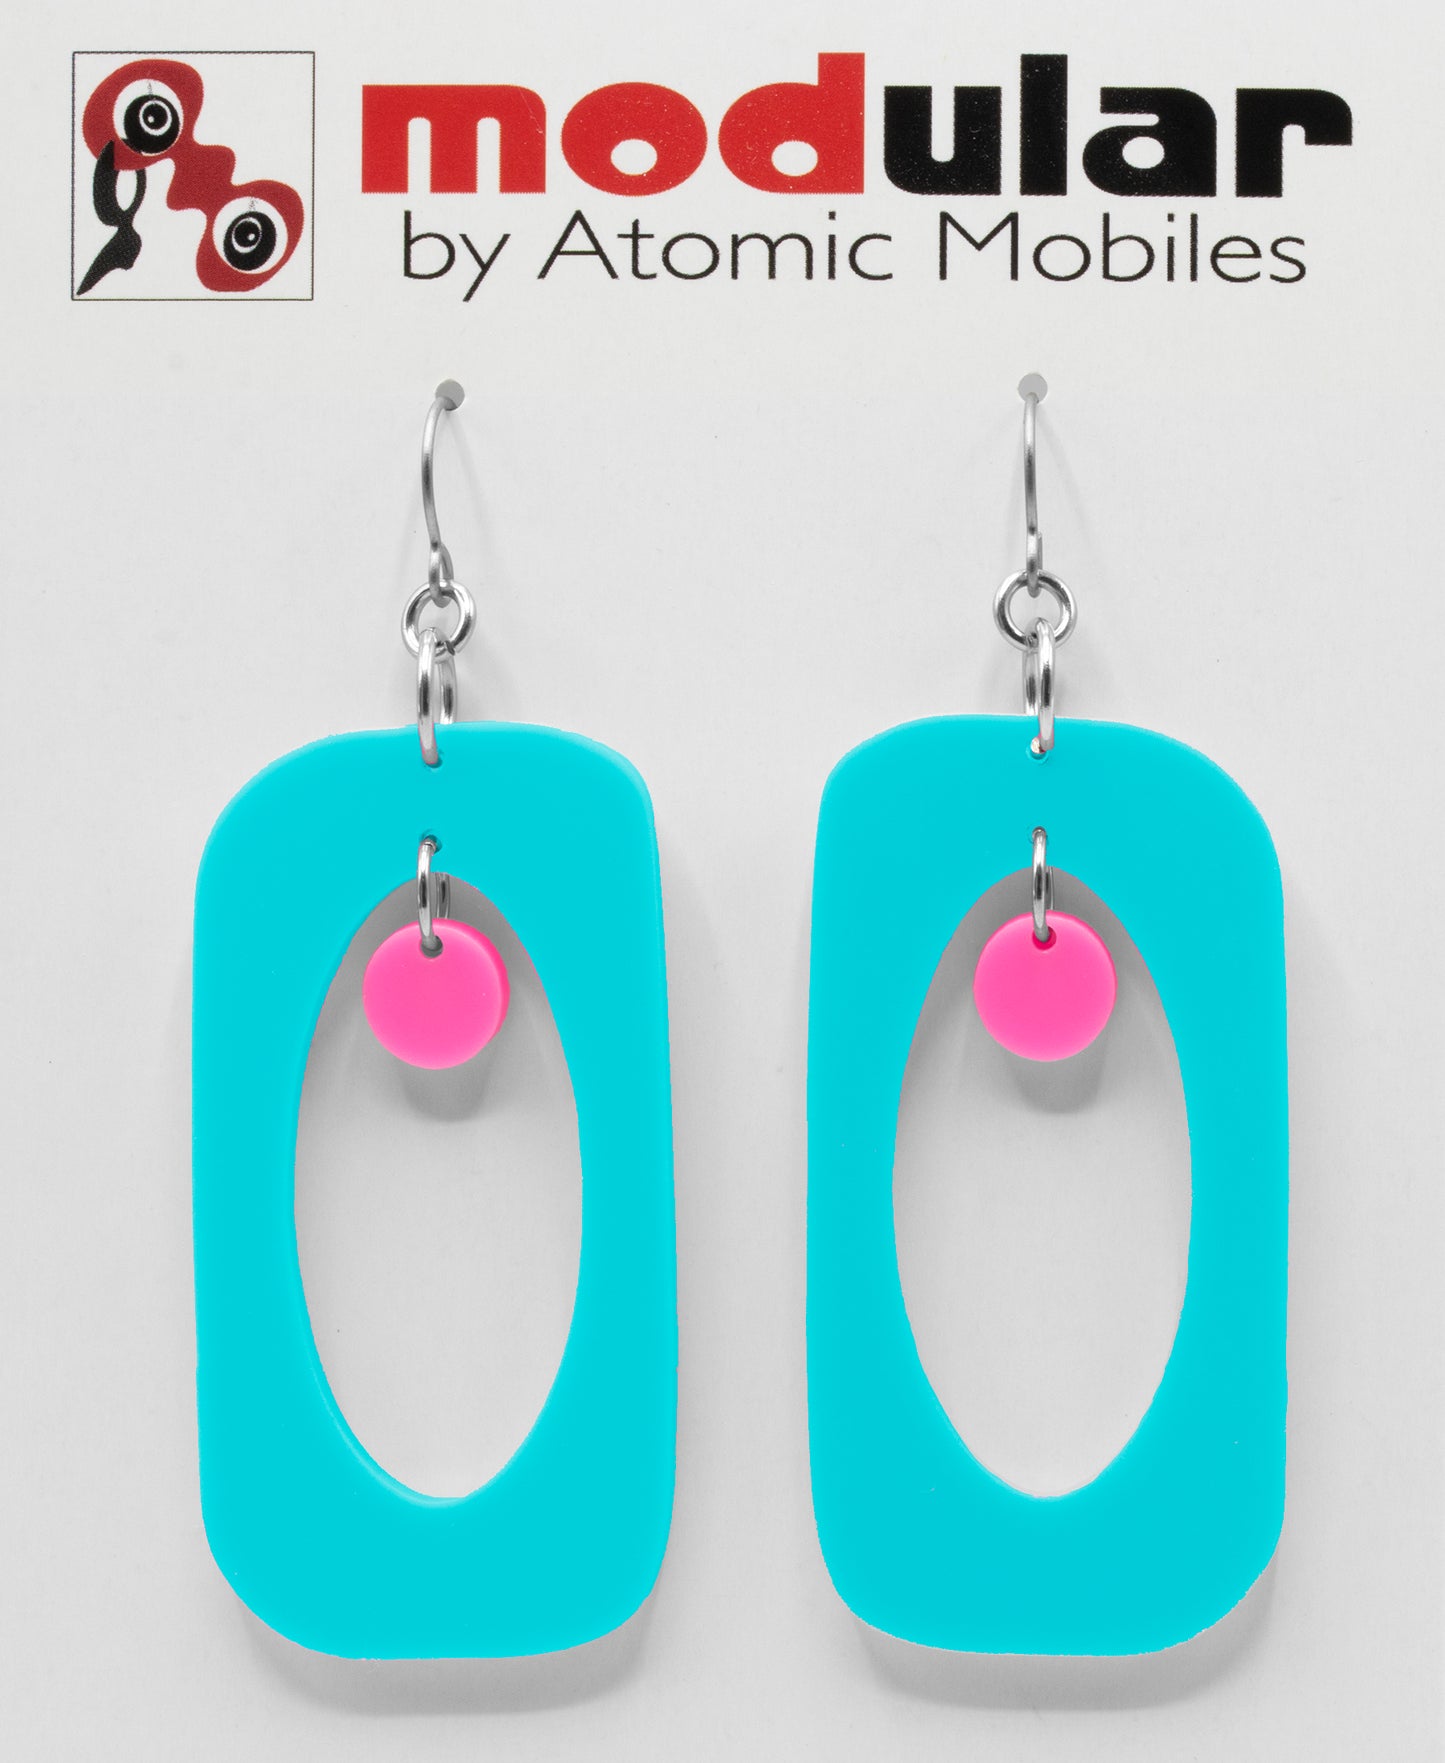 MODular Earrings - Beatnik Boho Statement Earrings in Aqua and Hot Pink by AtomicMobiles.com - retro era inspired mod handmade jewelry